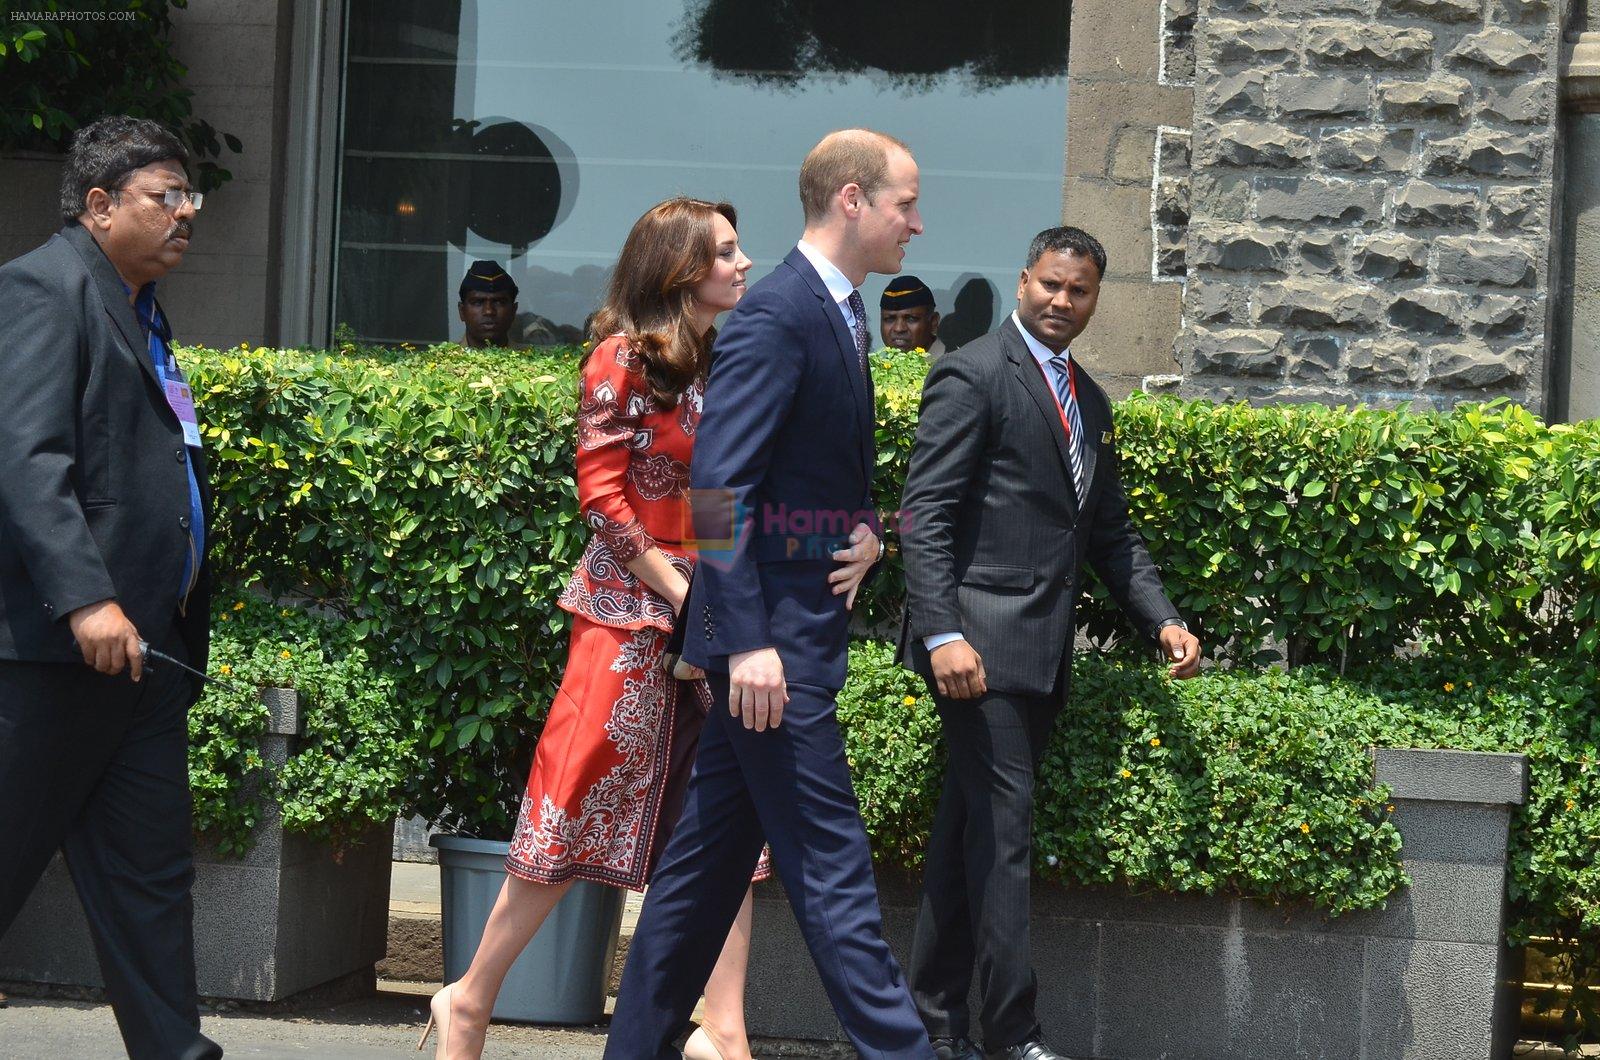 Prince William & Kate Middleton arrive in Mumbai on 10th April 2016